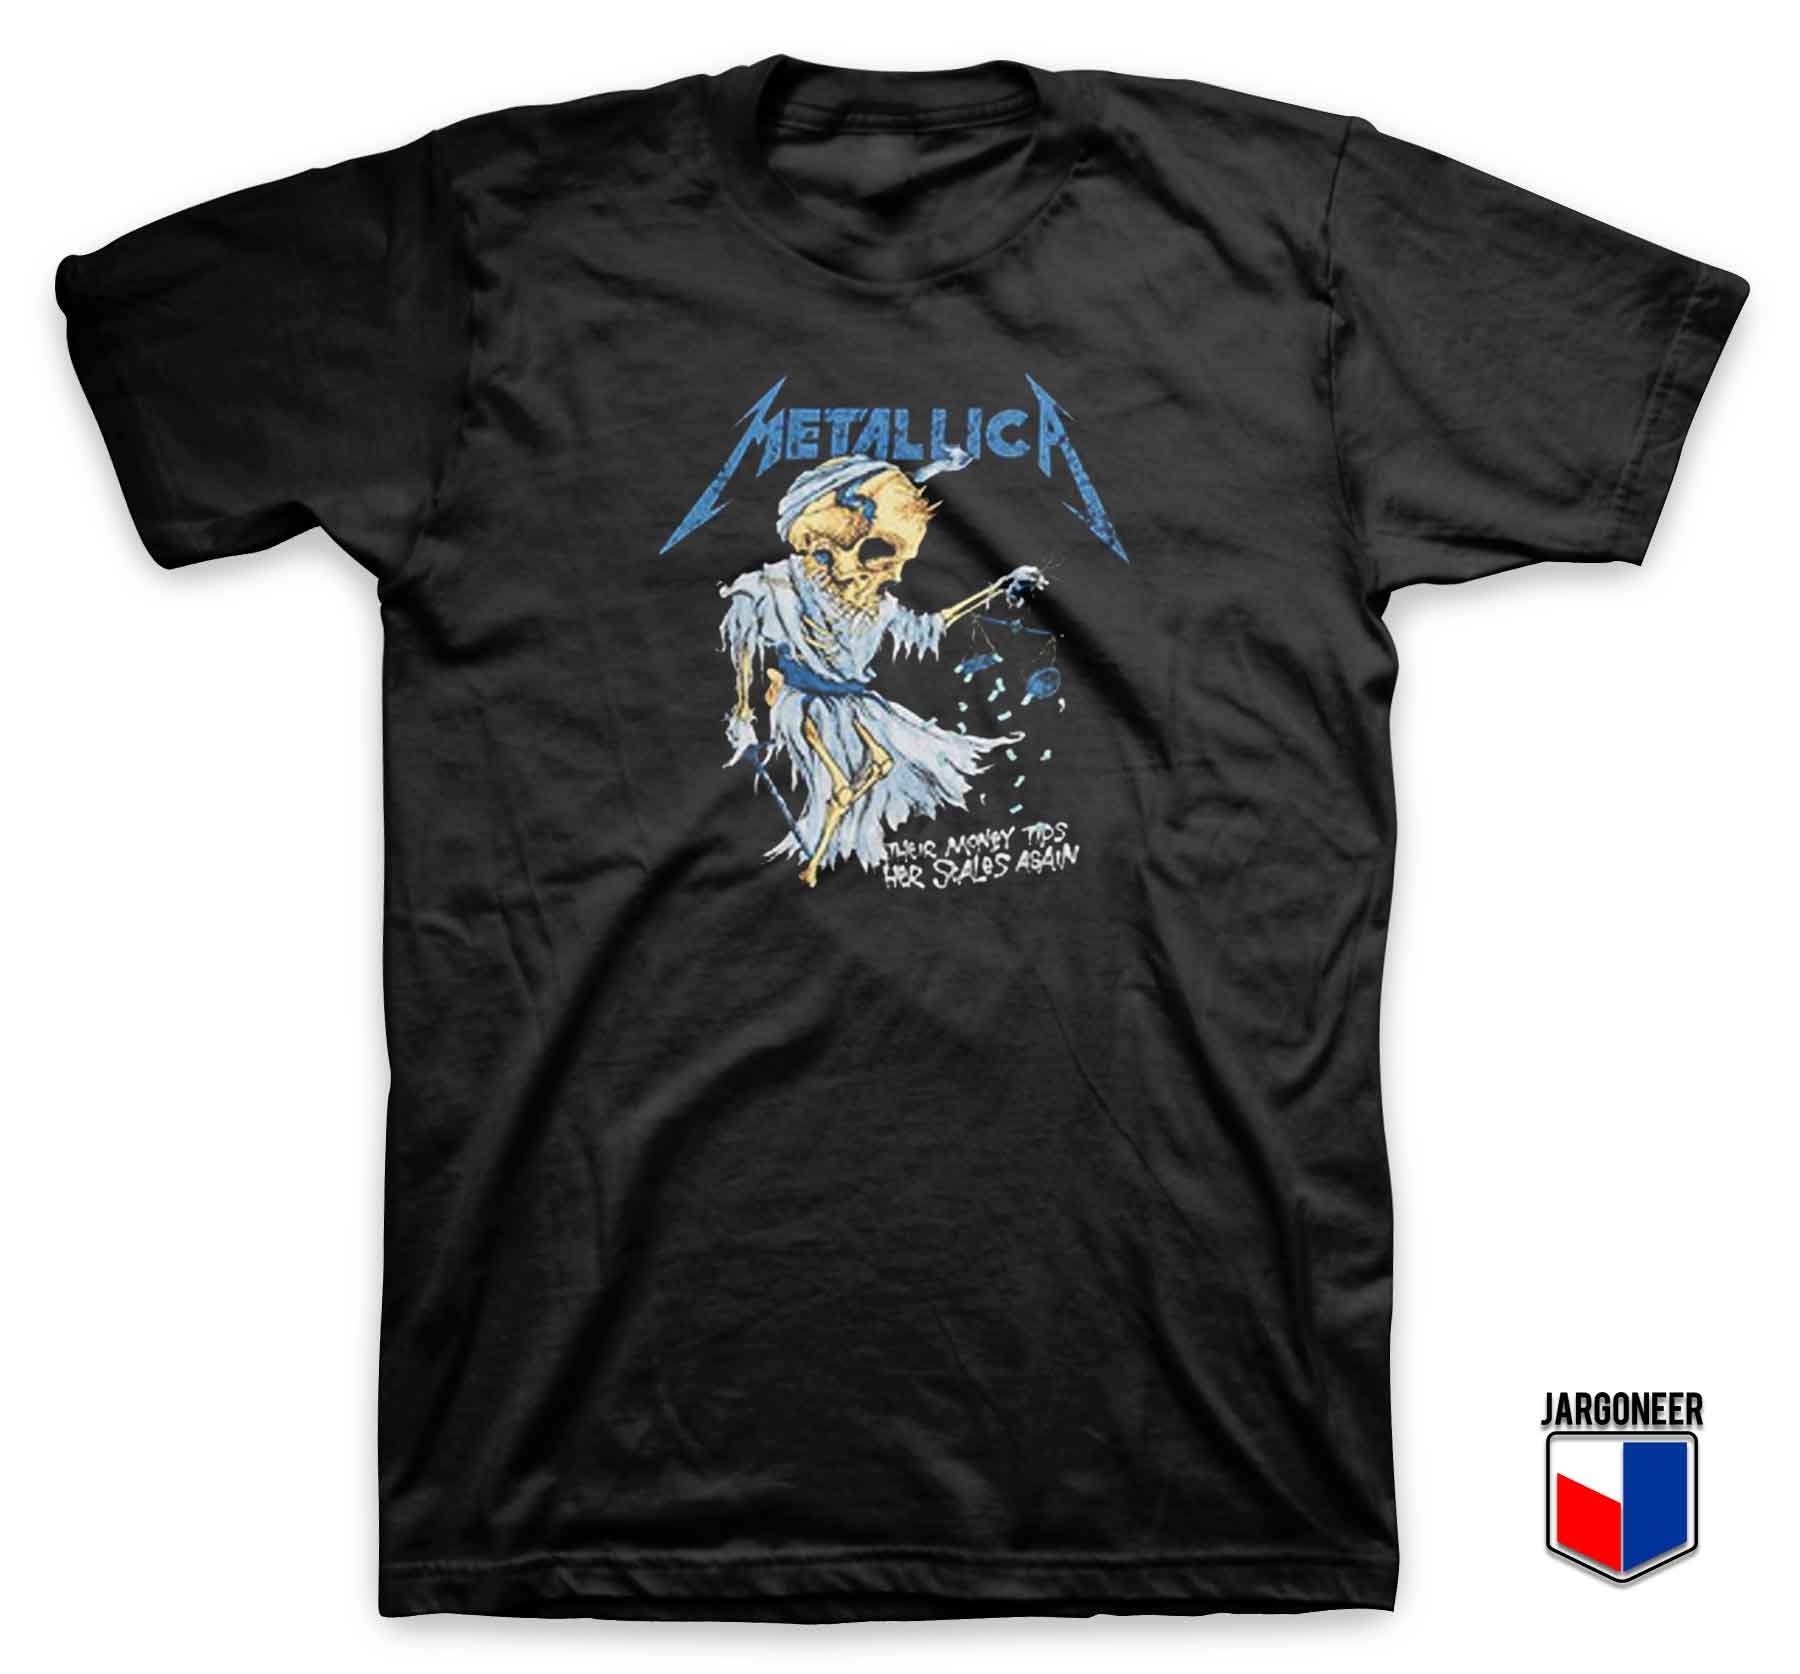 Metallica - Shop Unique Graphic Cool Shirt Designs